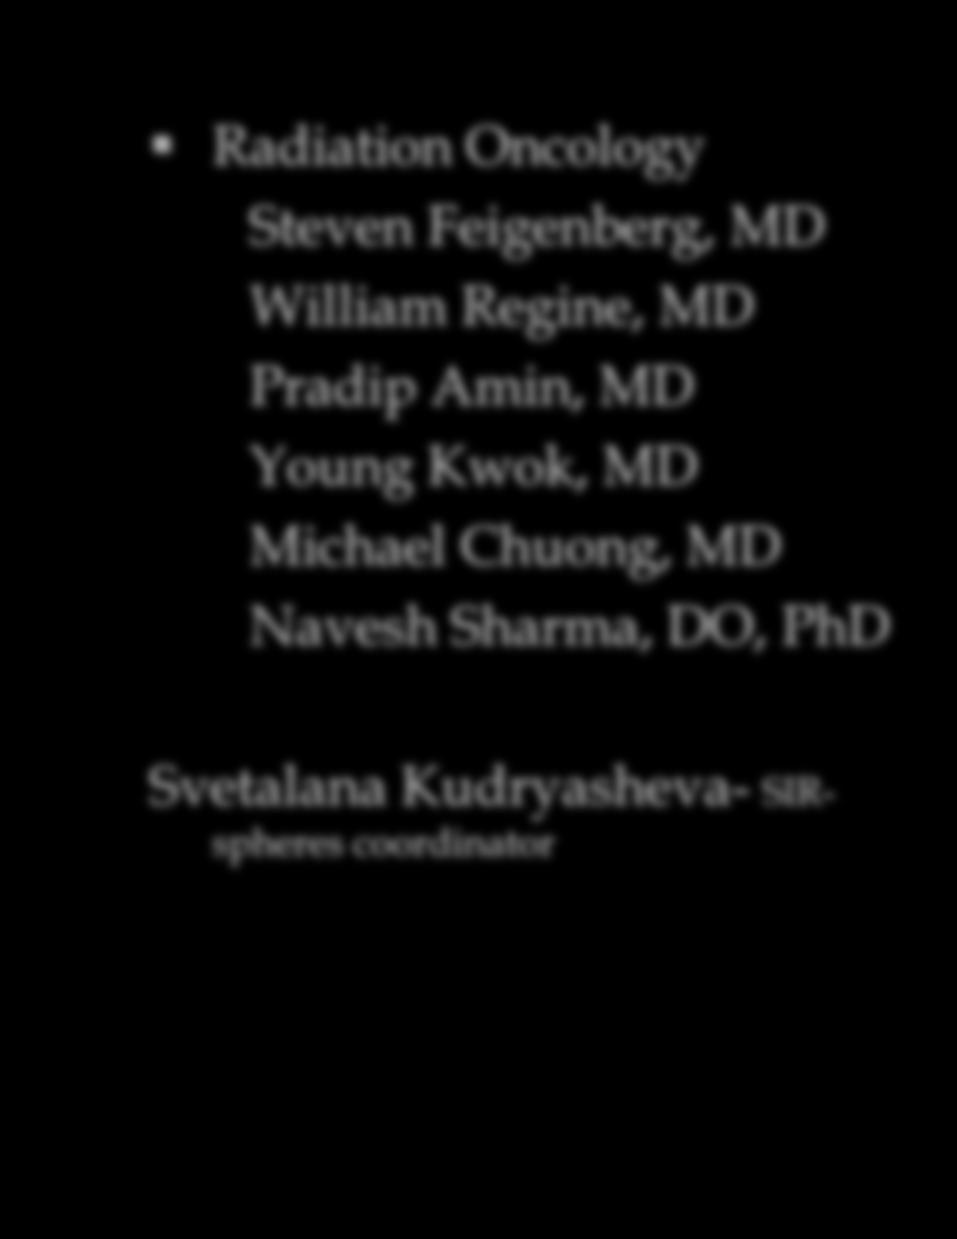 MD Nuclear Medicine Radiation Oncology Steven Feigenberg, MD William Regine, MD Pradip Amin, MD